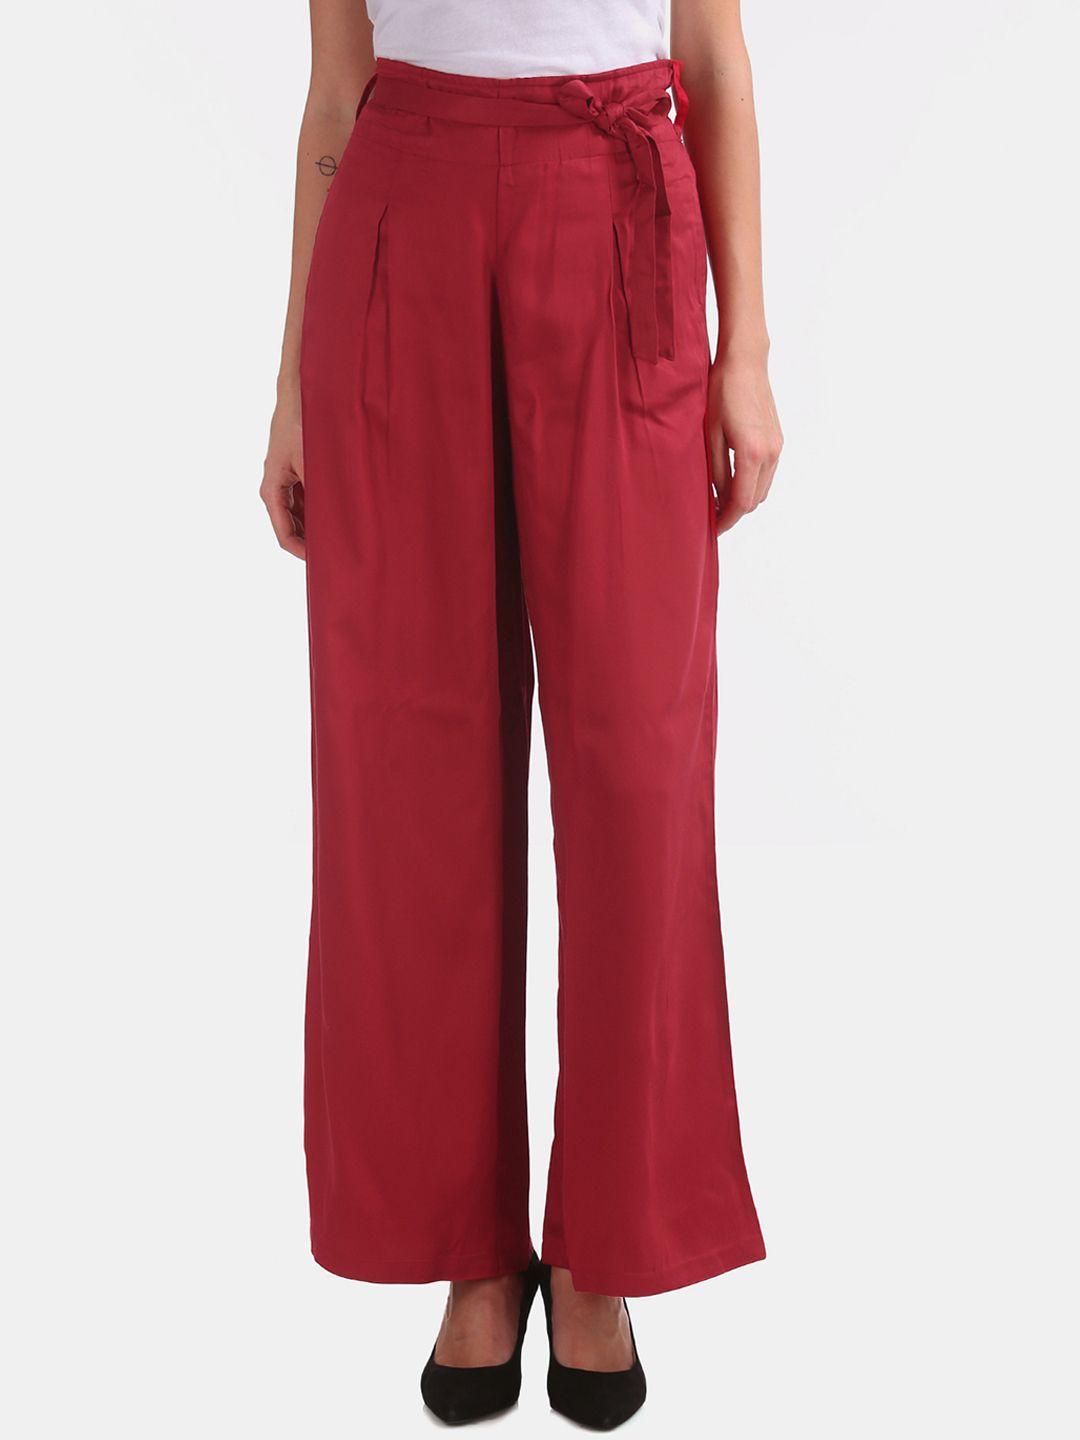 u.s. polo assn. women women red regular fit solid parallel trousers